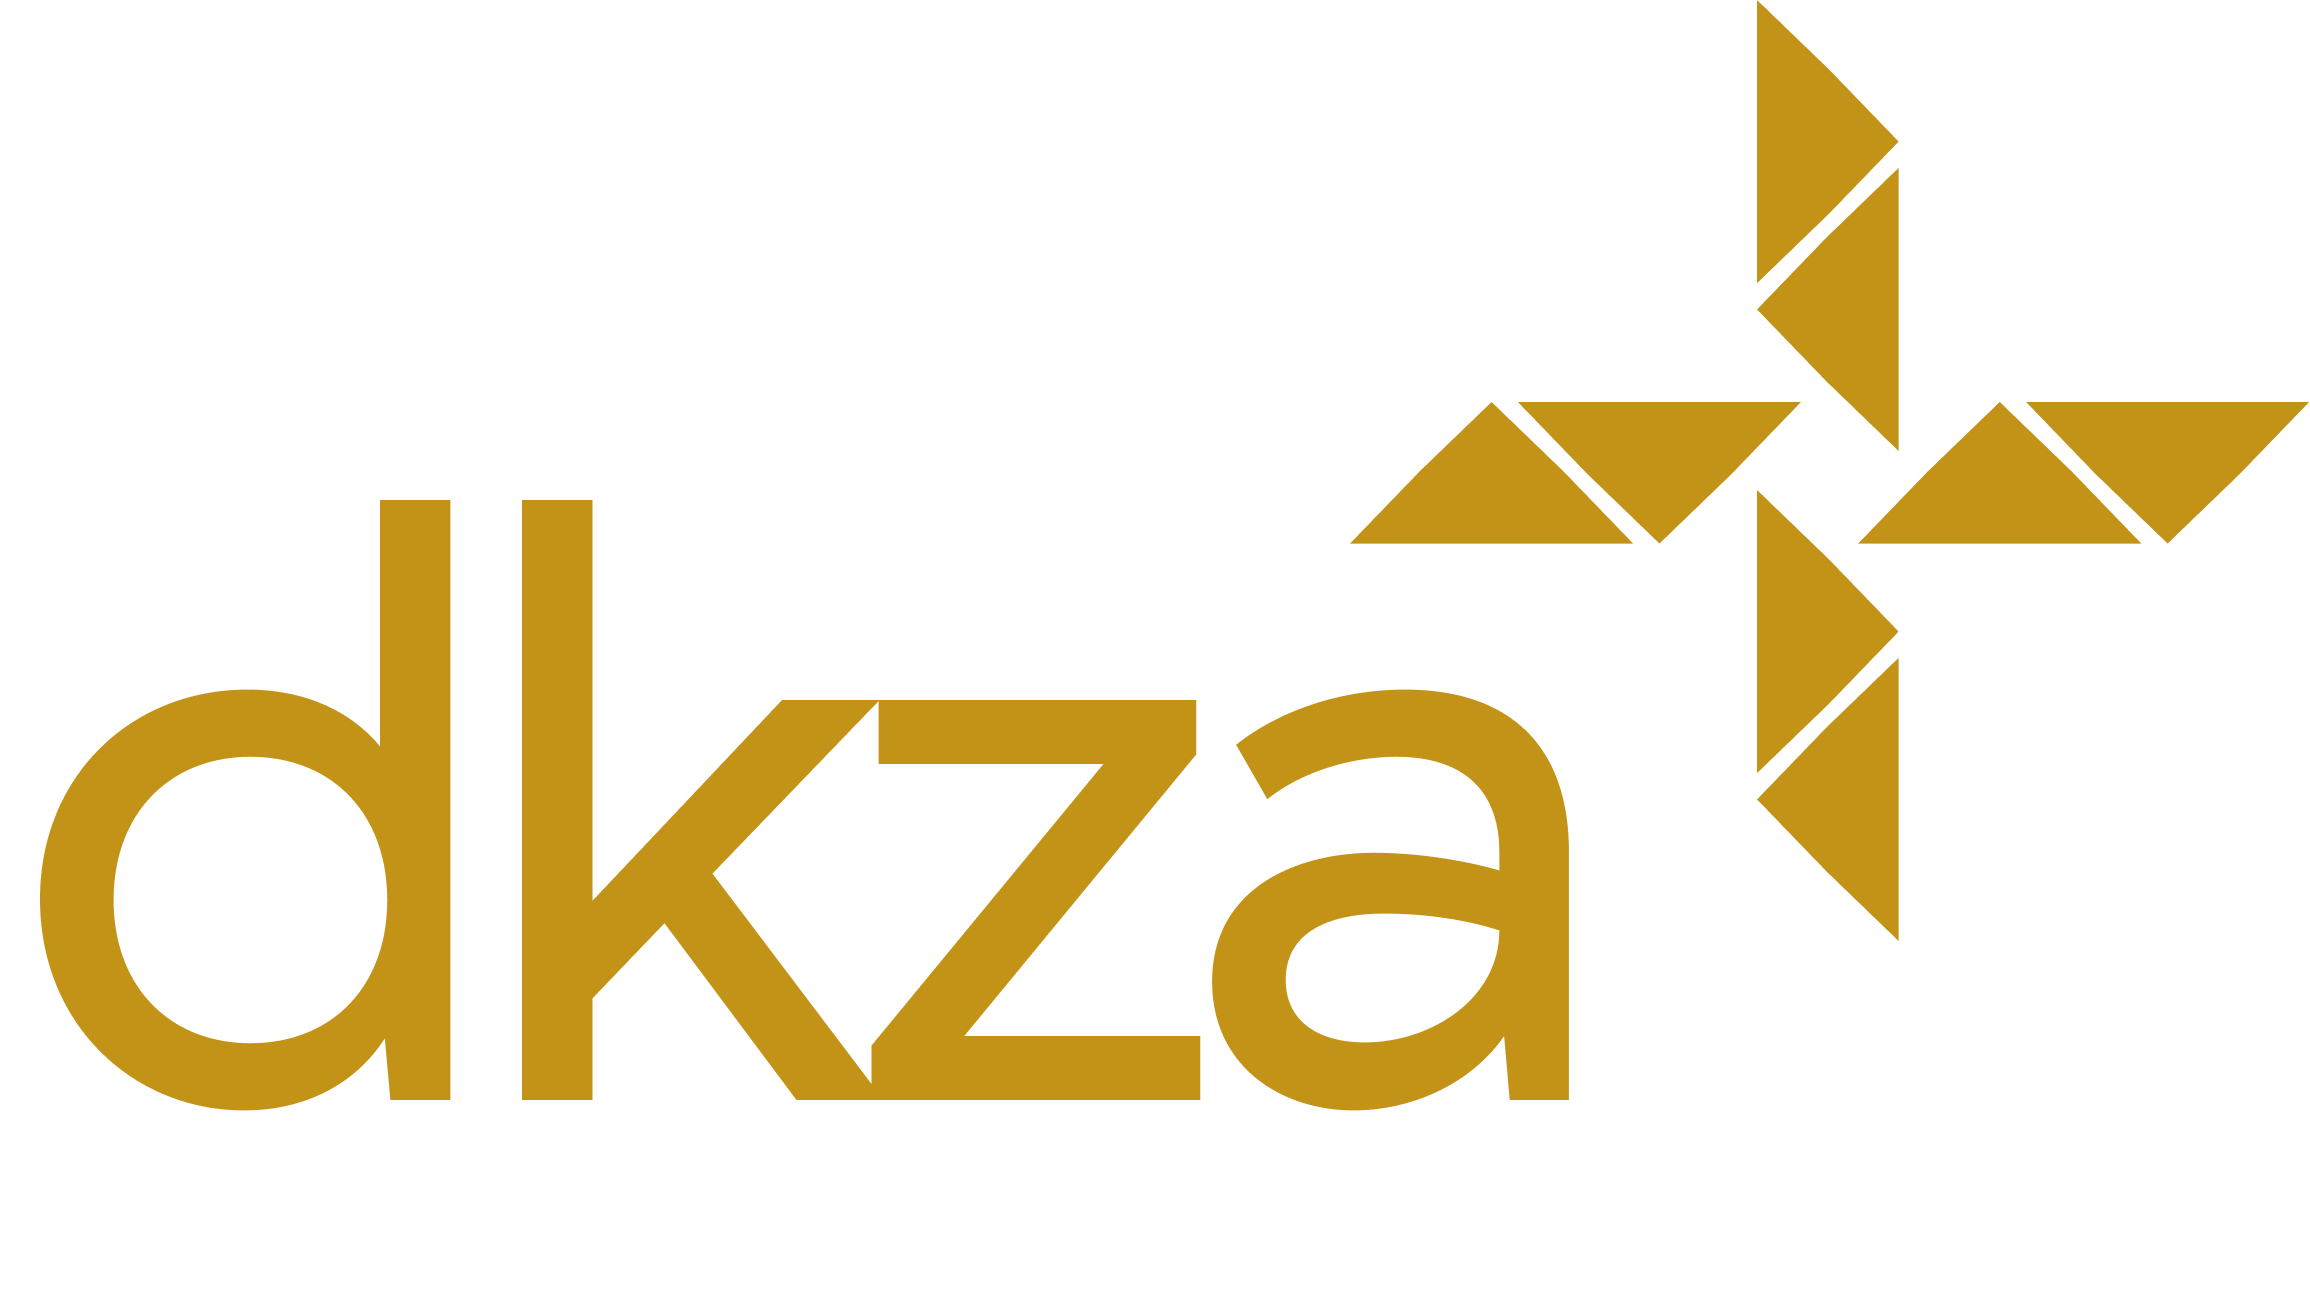 Dkza logo